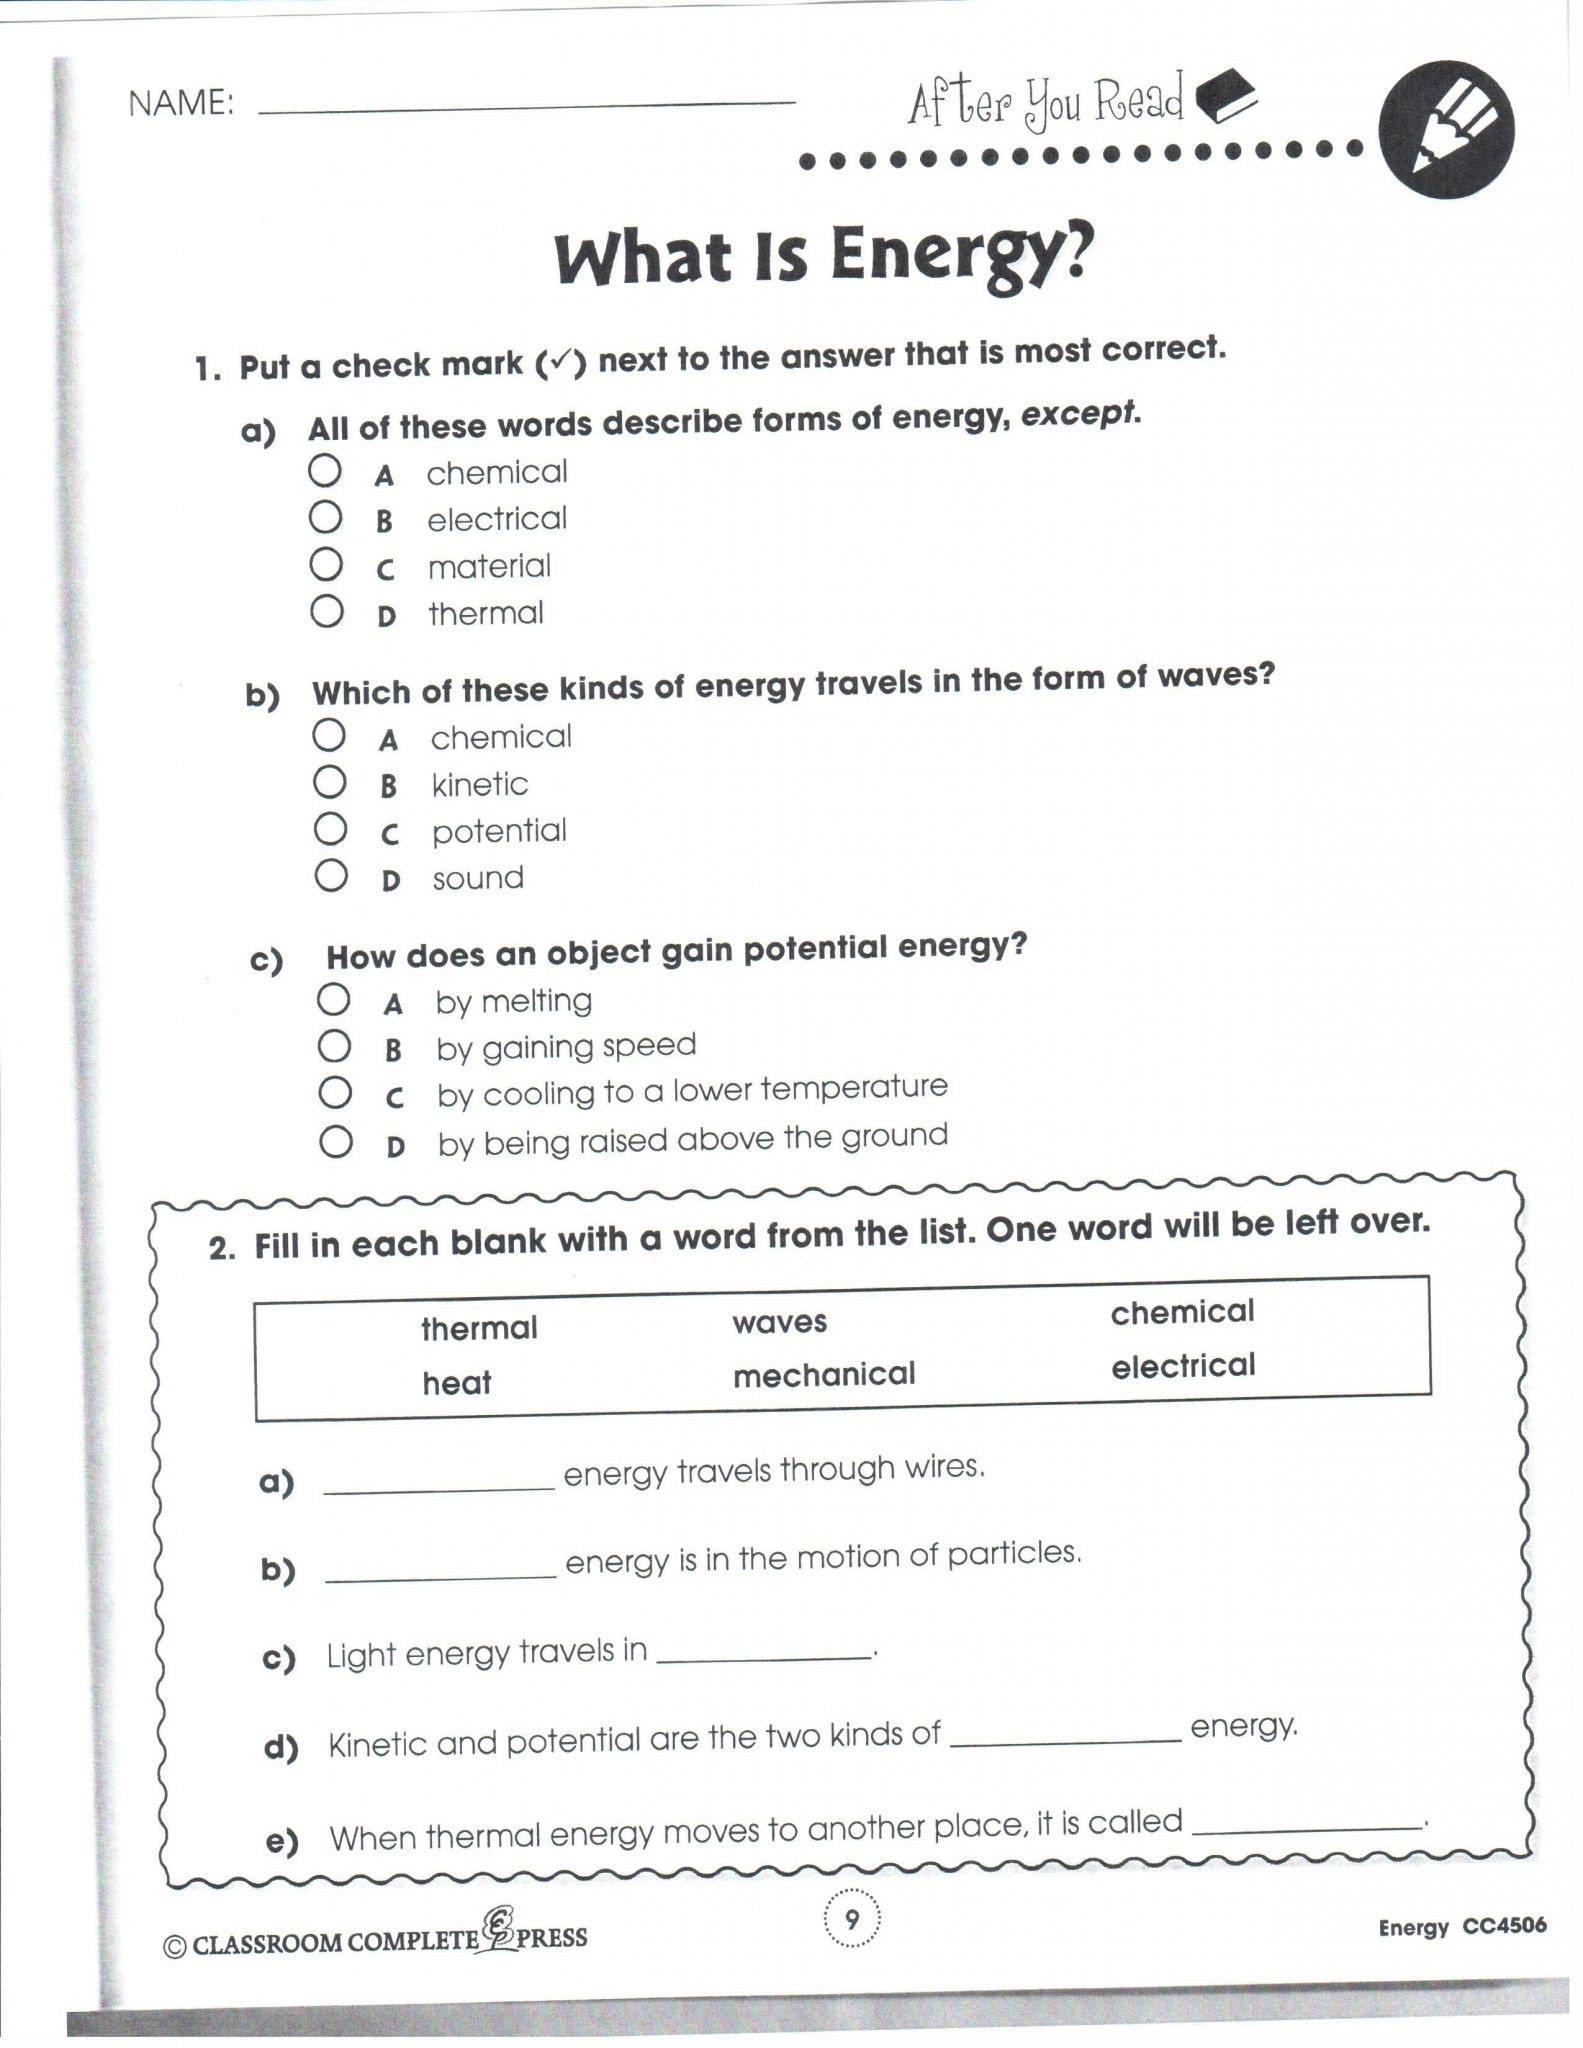 Potential and Kinetic Energy Worksheet 32 Kinetic and Potential Energy Worksheet Answers Key